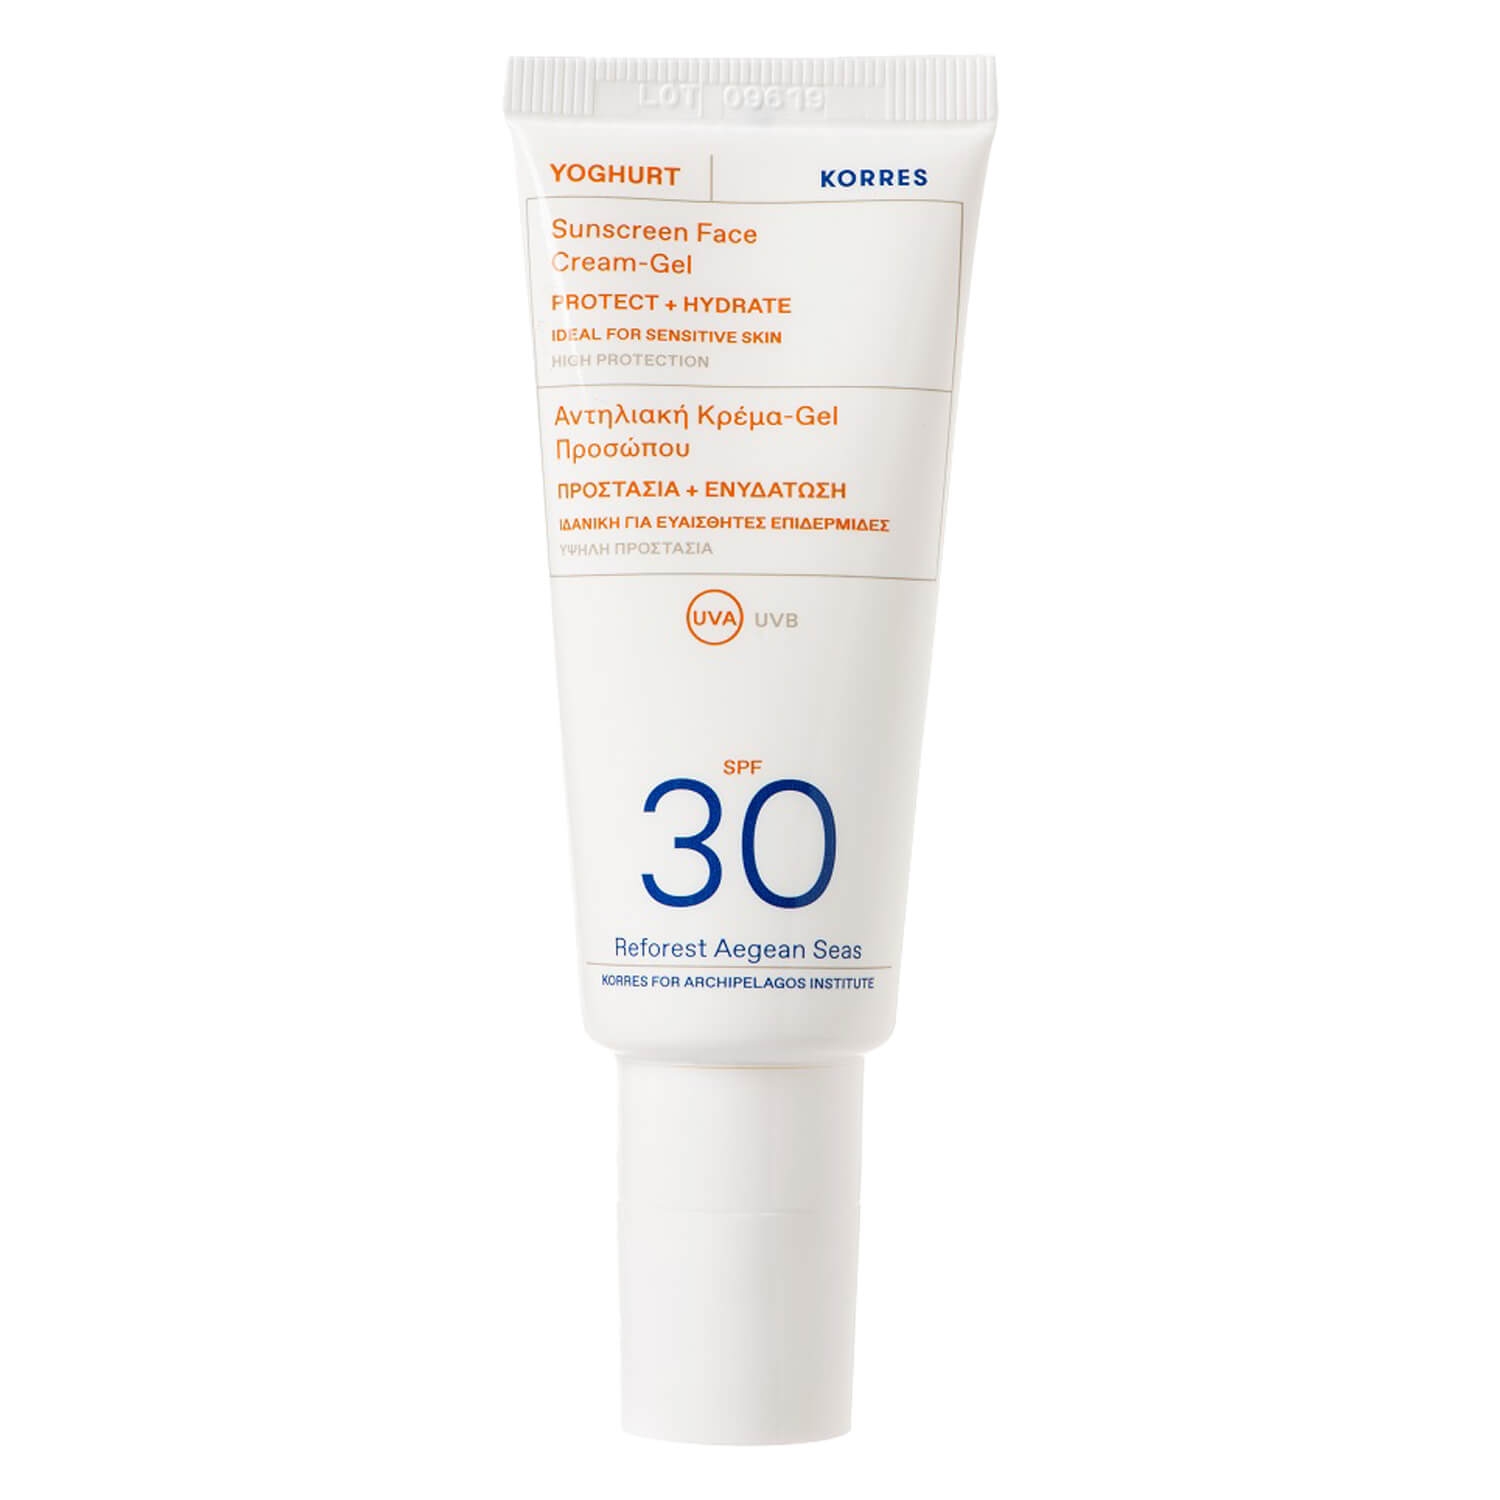 Image du produit de Korres Care - Yoghurt Sunscreen Face Cream-Gel SPF30